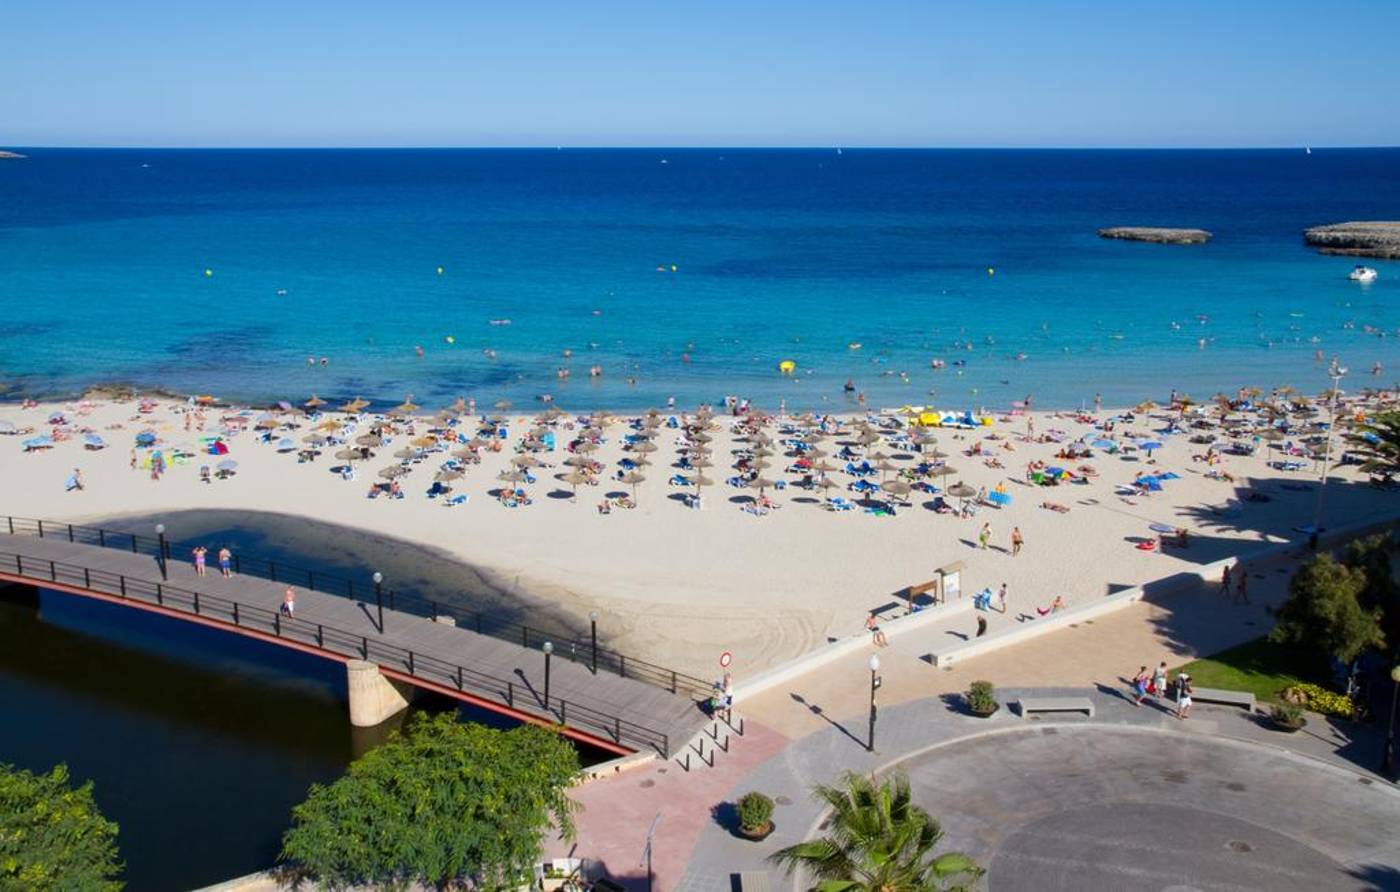 Playa Moreia in Balearics, Majorca, Spain